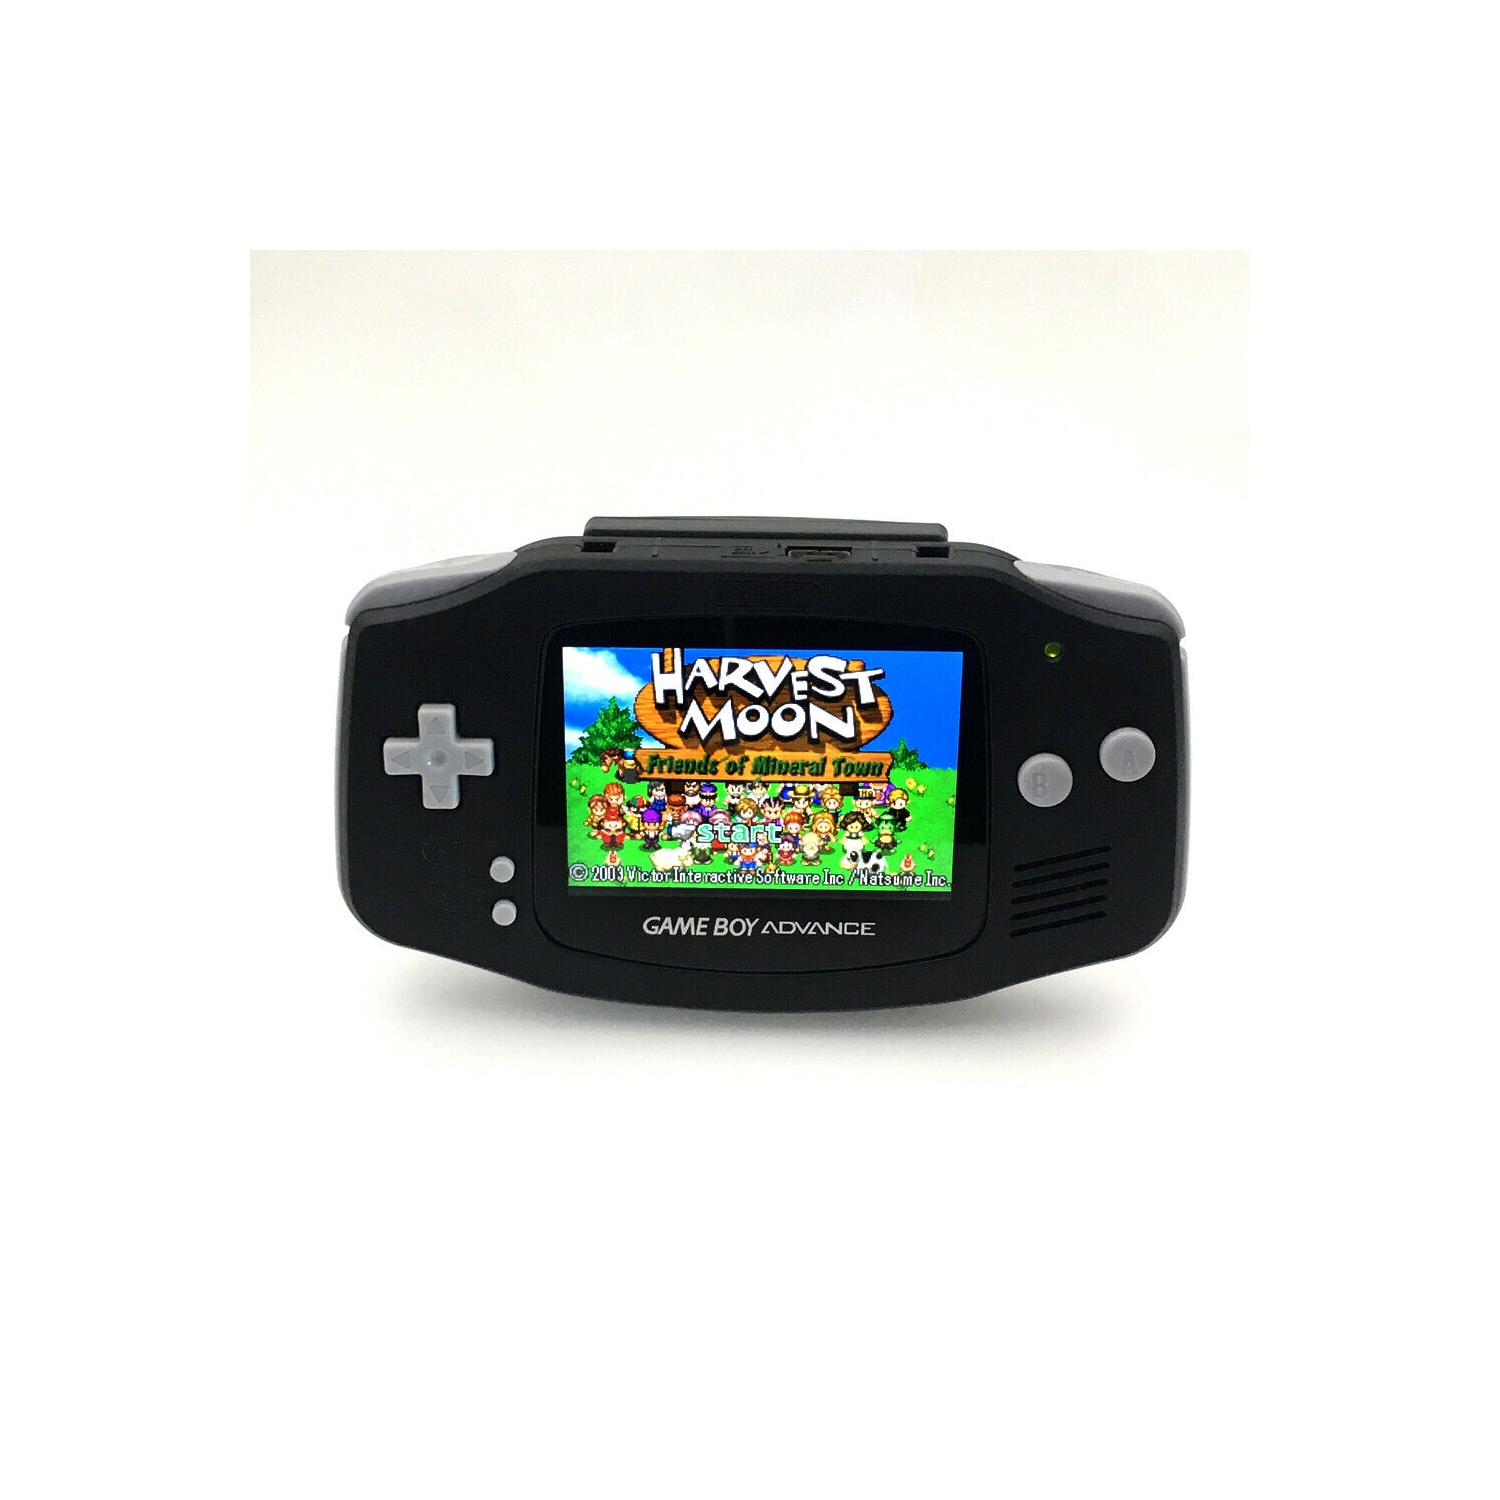 Authentic Refurbished Excellent Nintendo Gameboy Advance GBA Black Handheld Gaming BACKLIT IPS